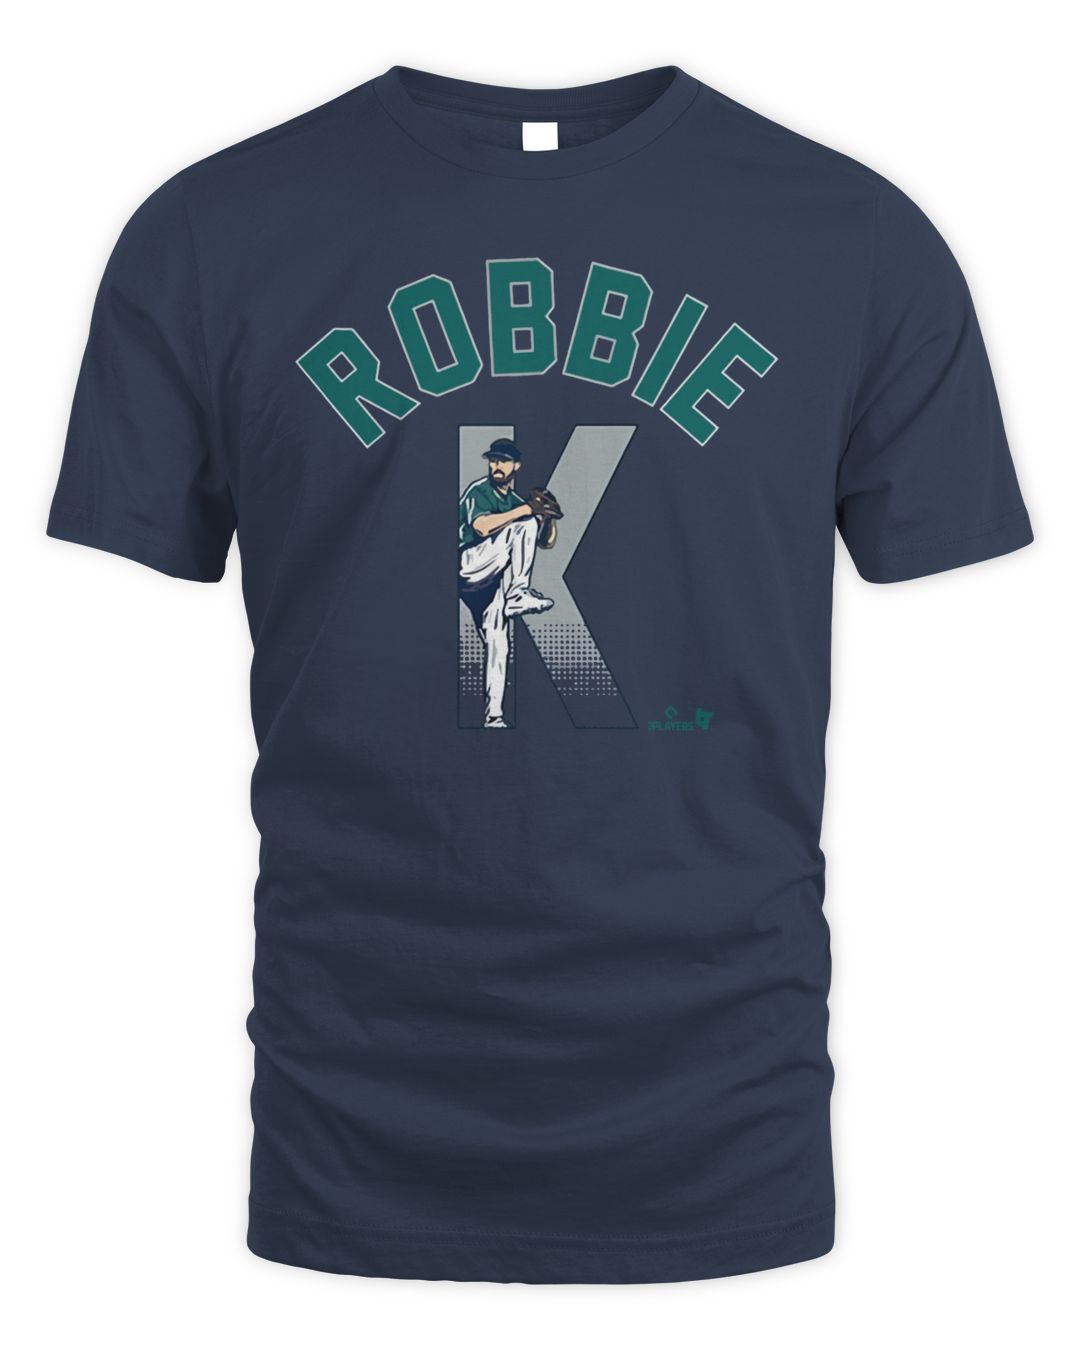 Robbie Ray Robbie K Seattle Shirt